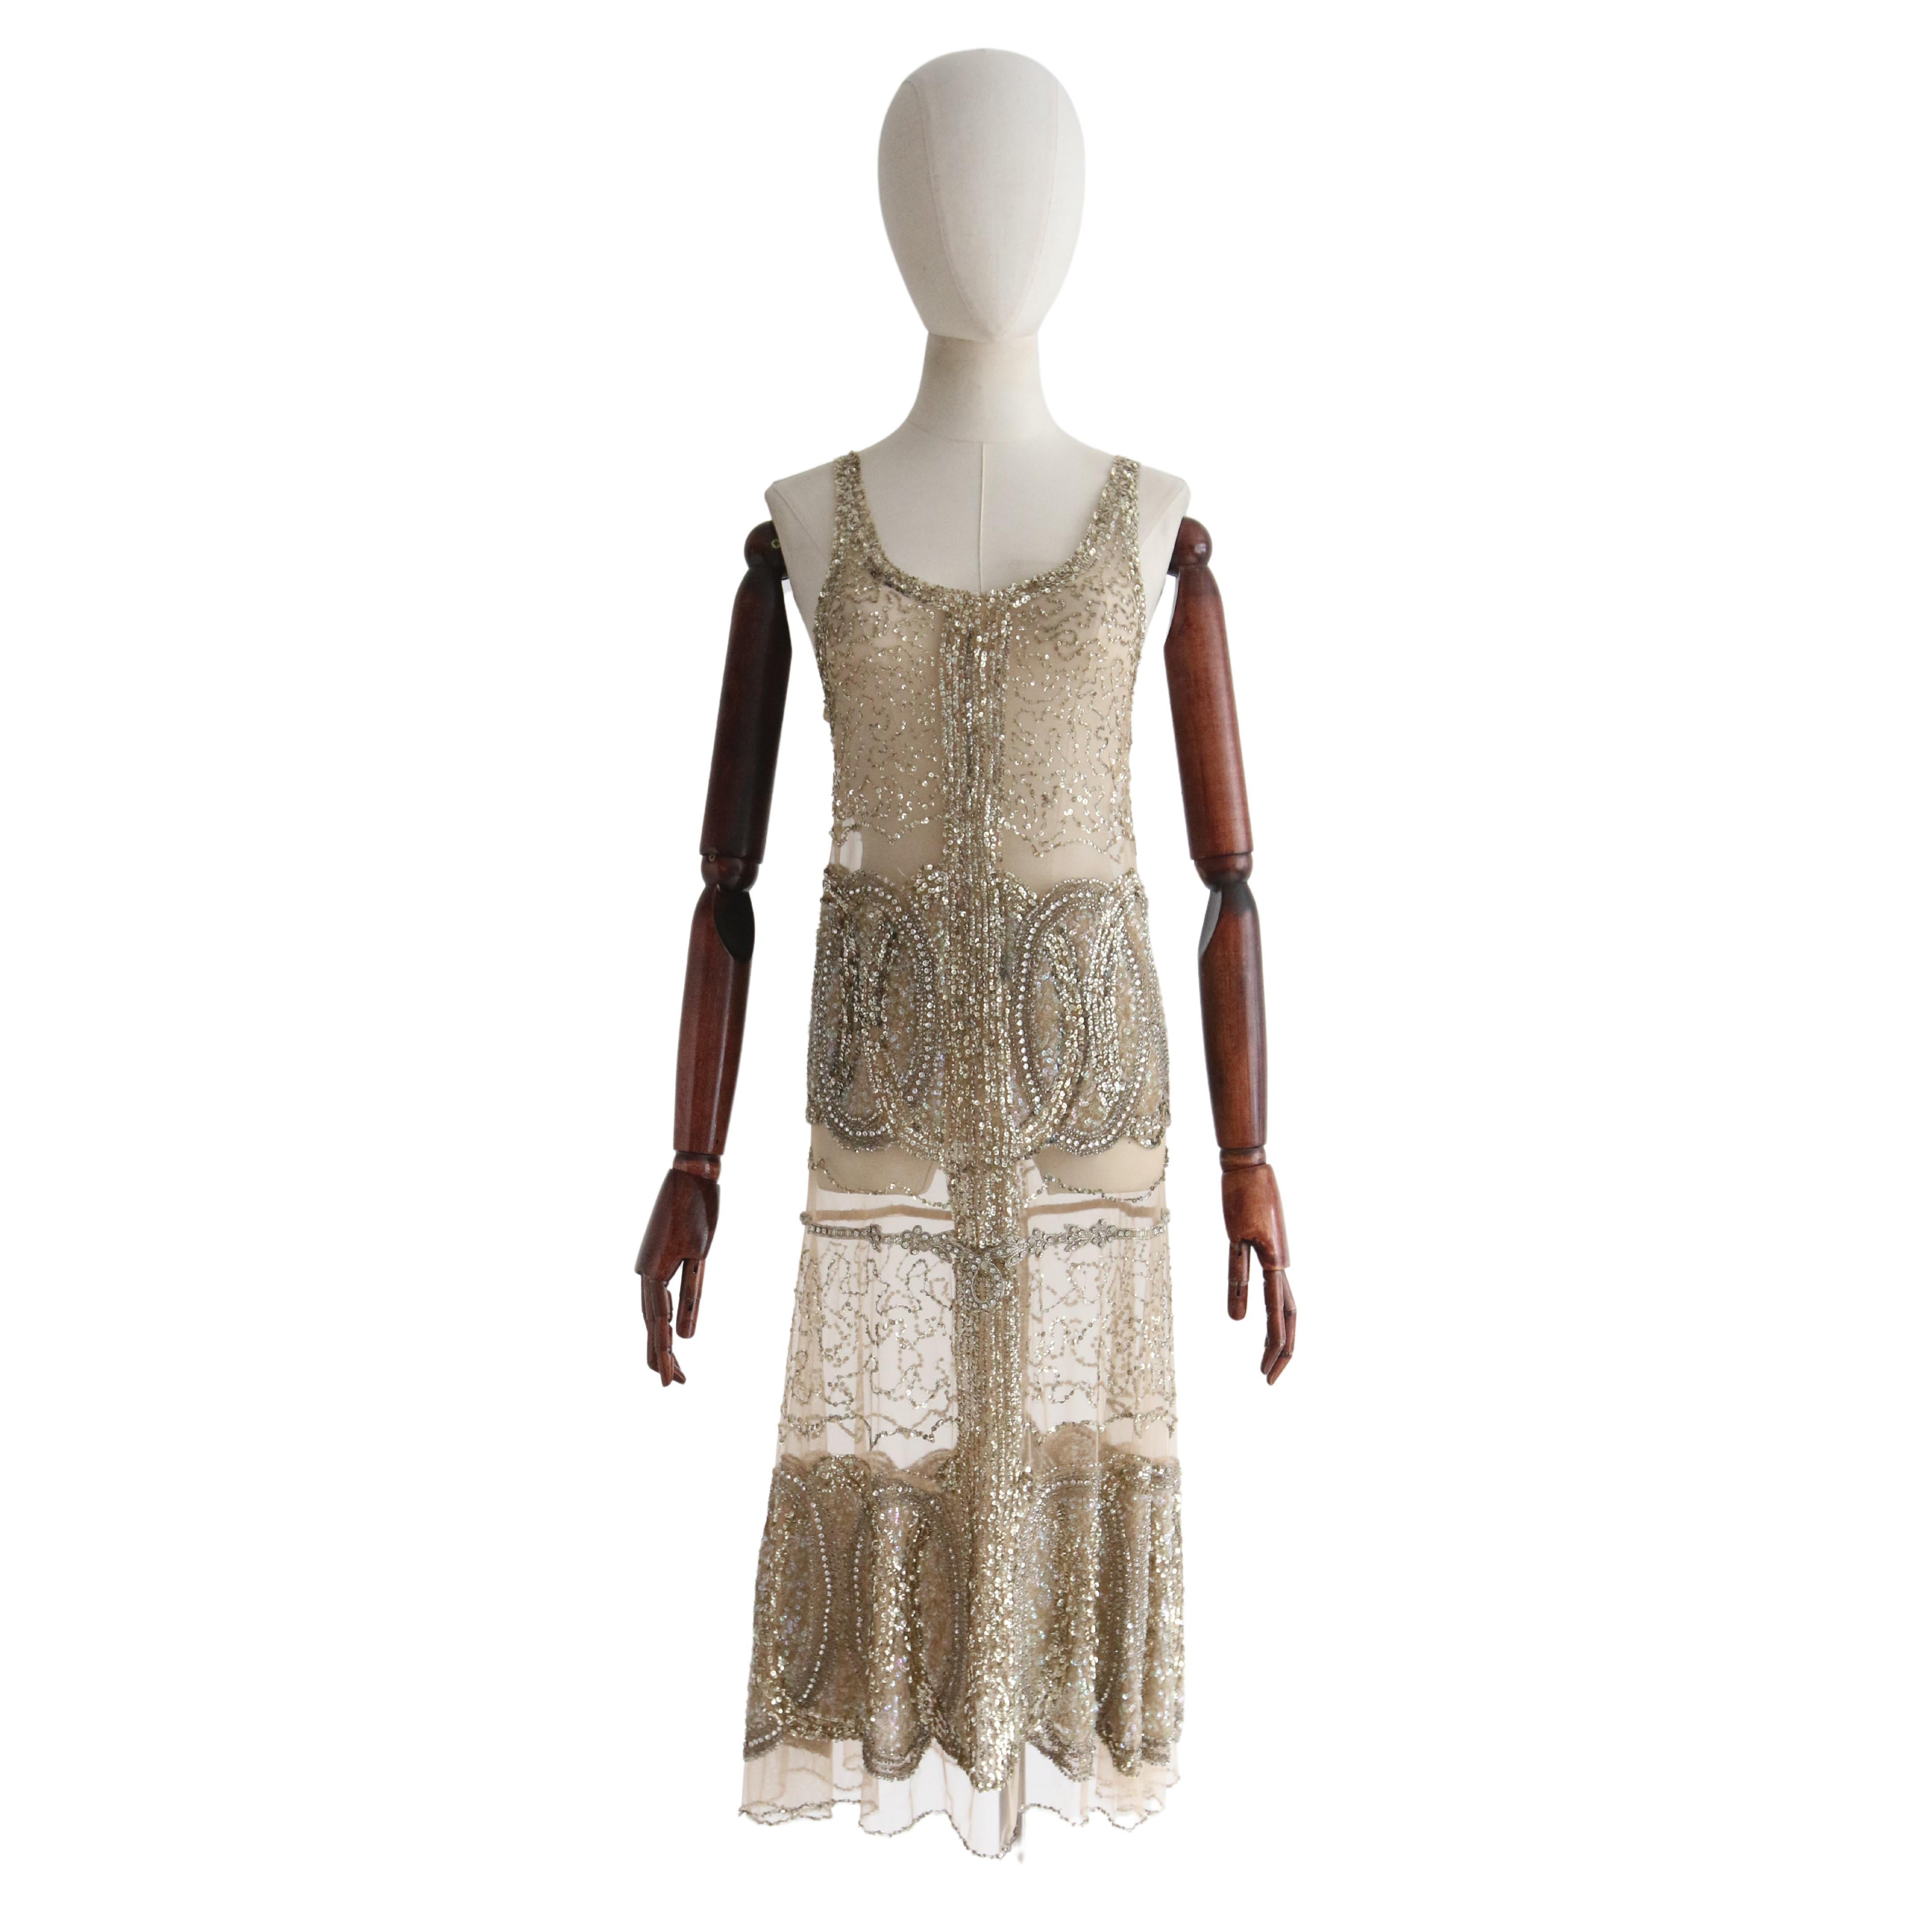 Vintage 1920er Gold Perlen Pailletten Kleid Flapper Kleid UK 6-8 US 2-4